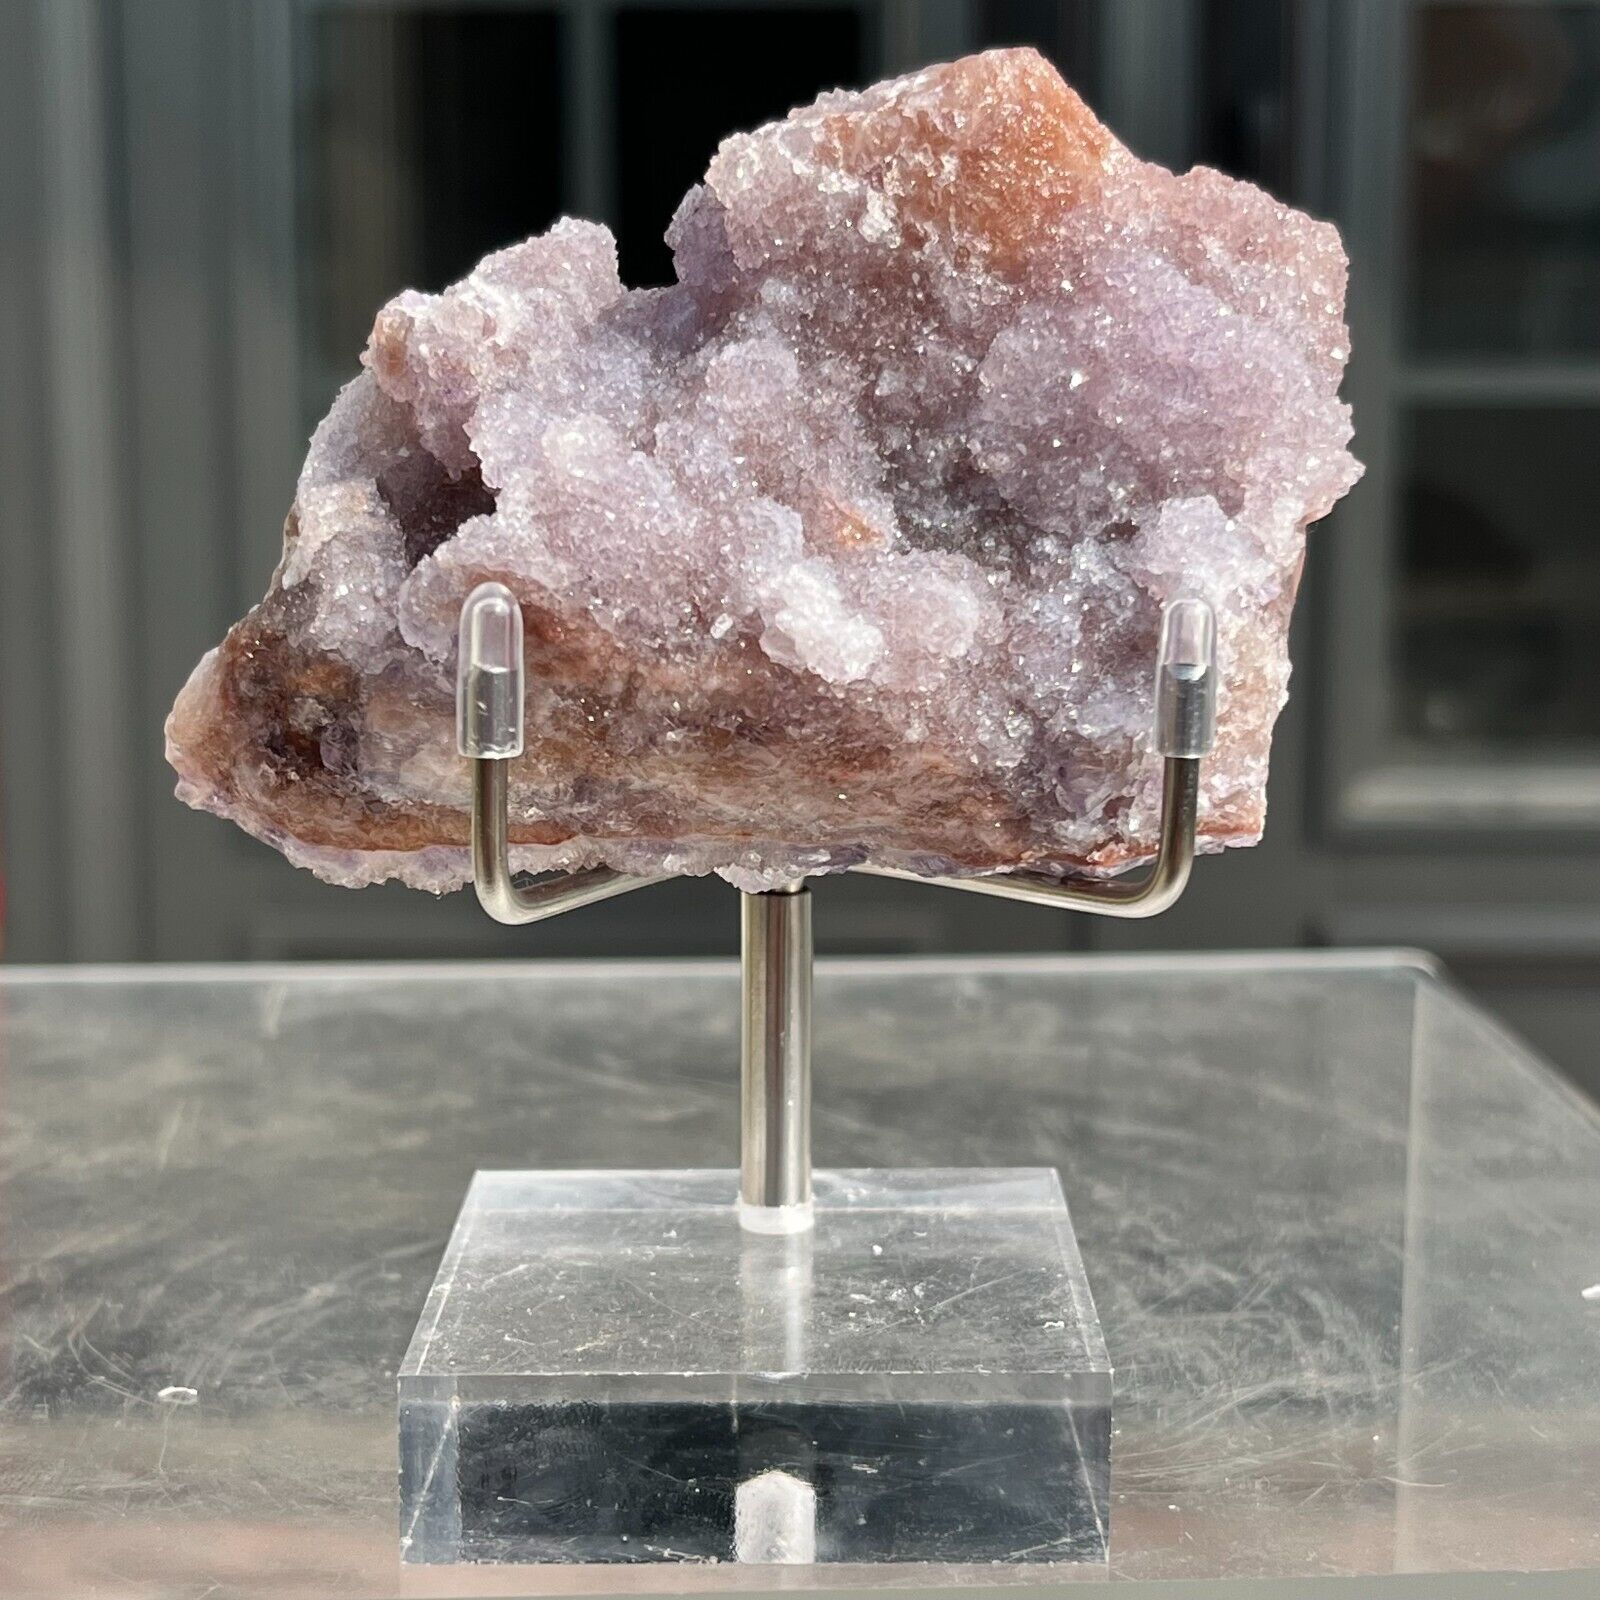 202g Natural Purple Violet Fluorite Quartz Crystal Mineral Specimen+Stand